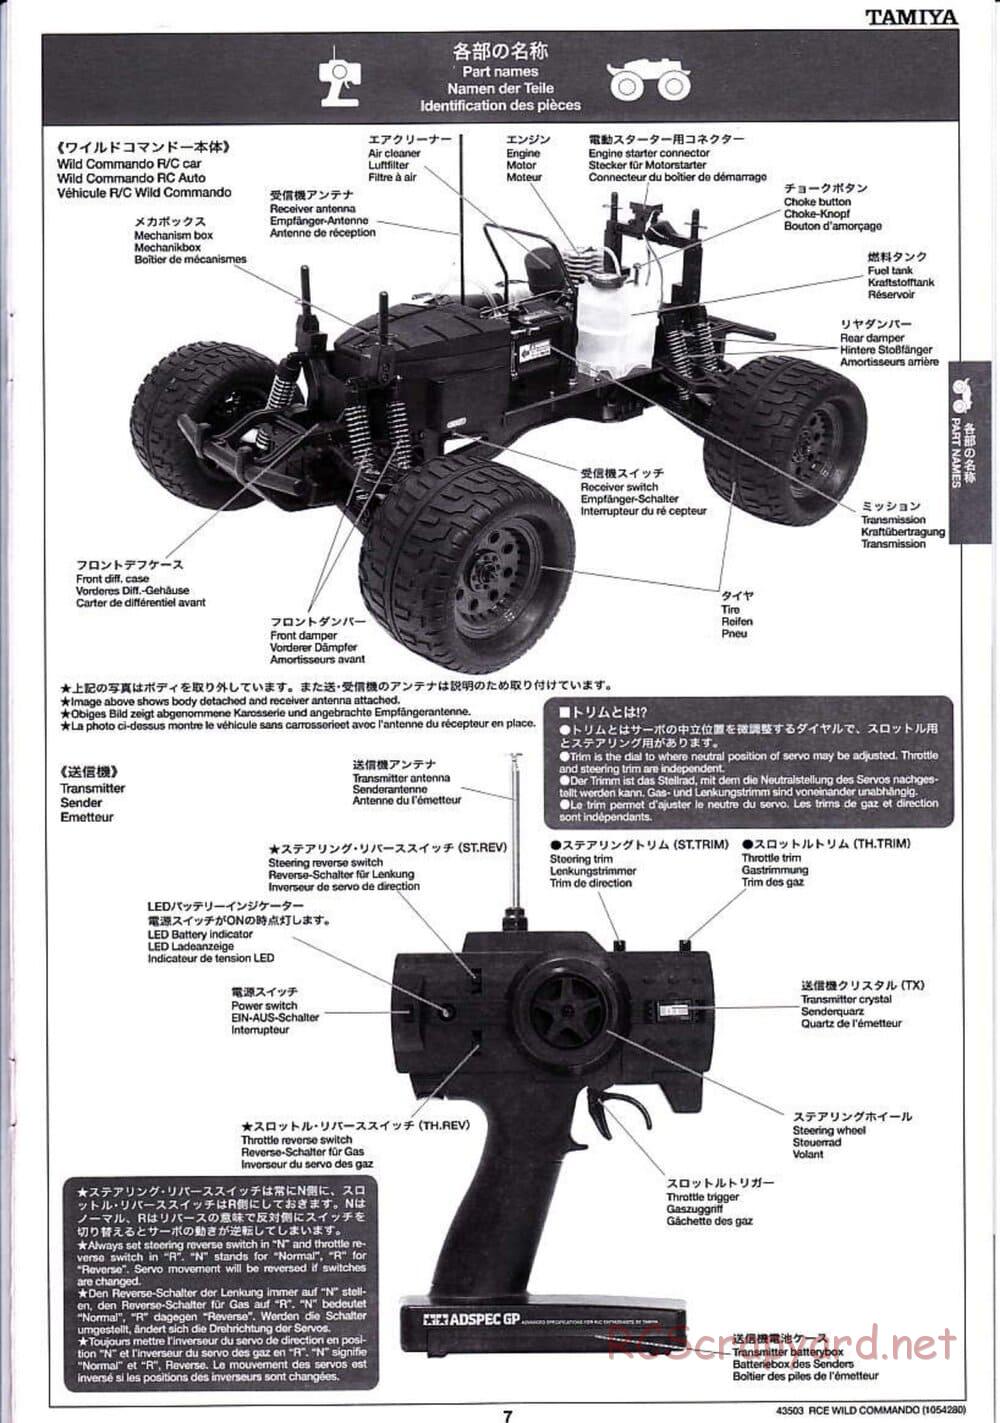 Tamiya - Wild Commando - TGM-02 Chassis - Manual - Page 7